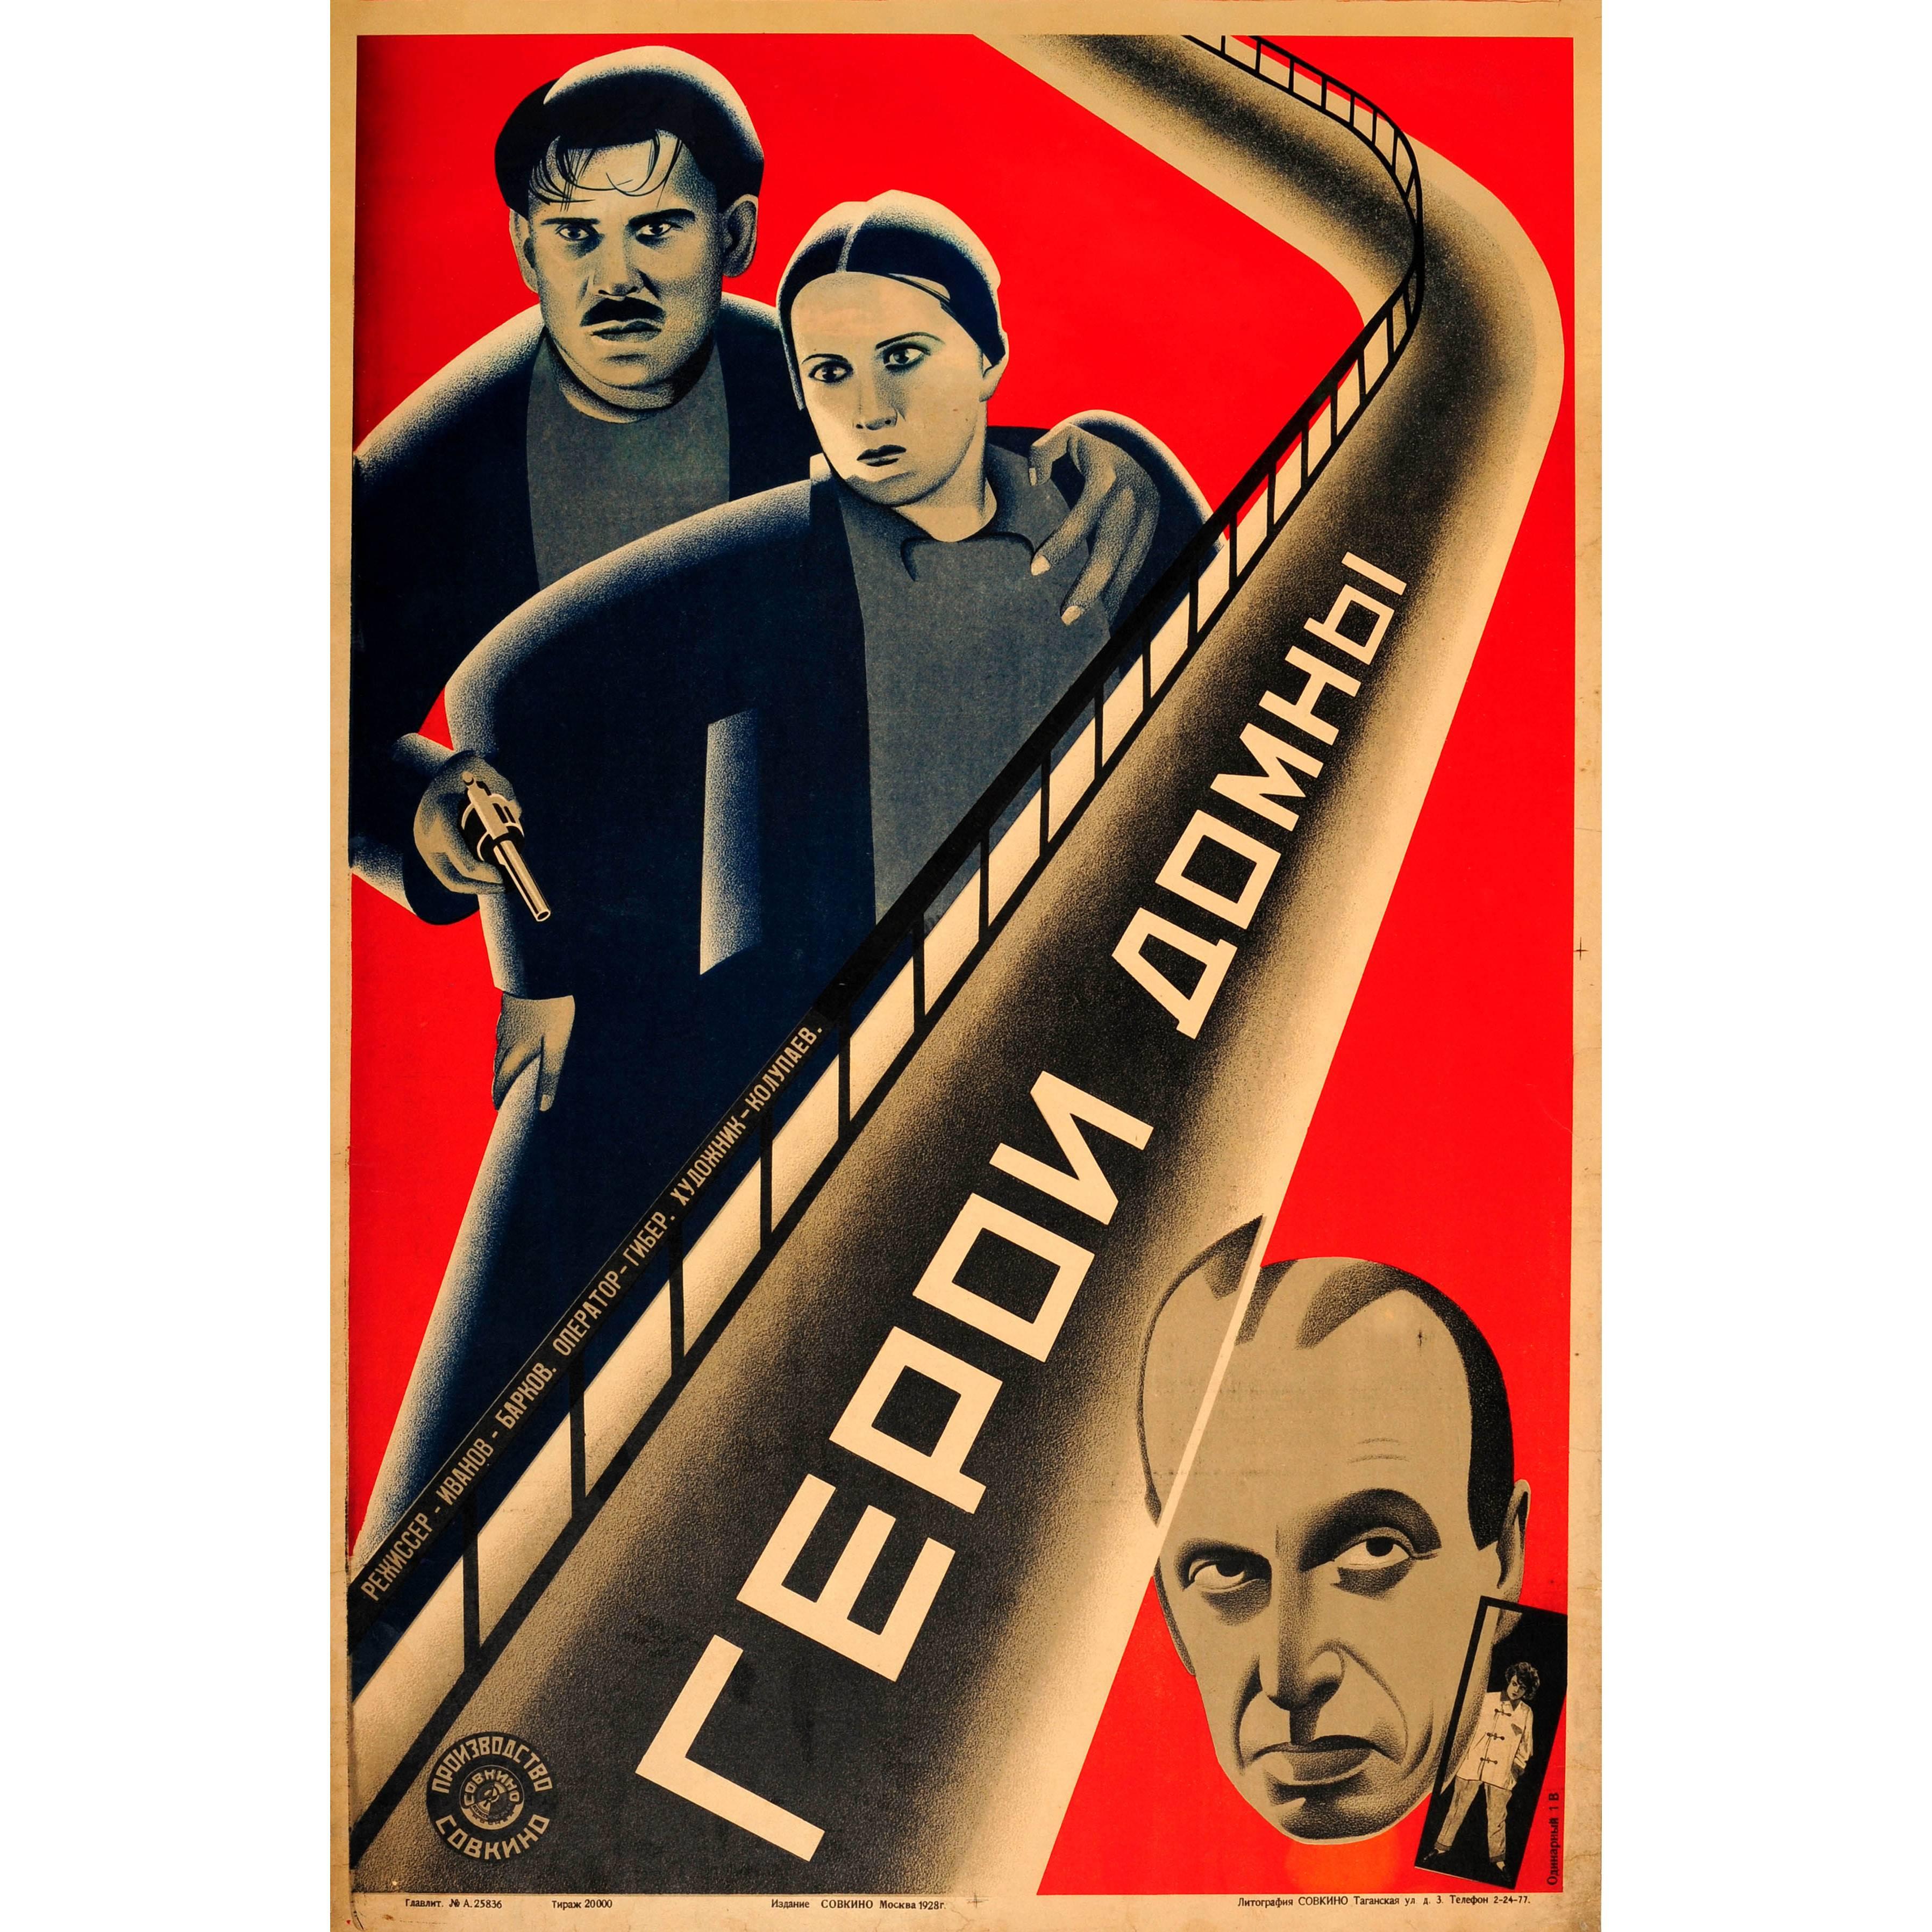 Original Vintage Constructivist Movie Poster for a Soviet Film Heroes Of Furnace